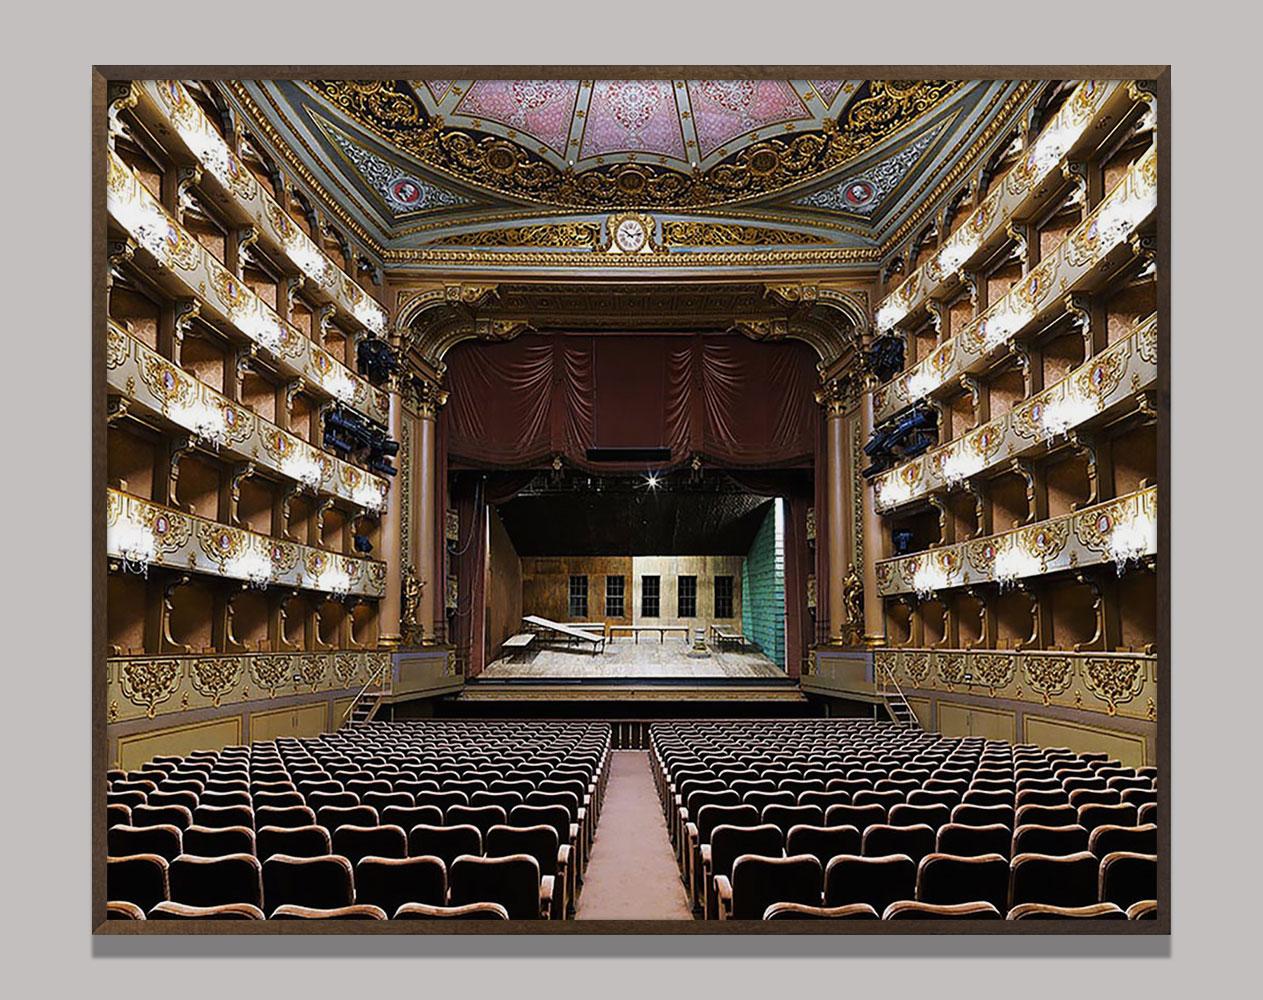 Teatro Sao Carlos, Lisbon, Portugal - Photograph by Massimo Listri